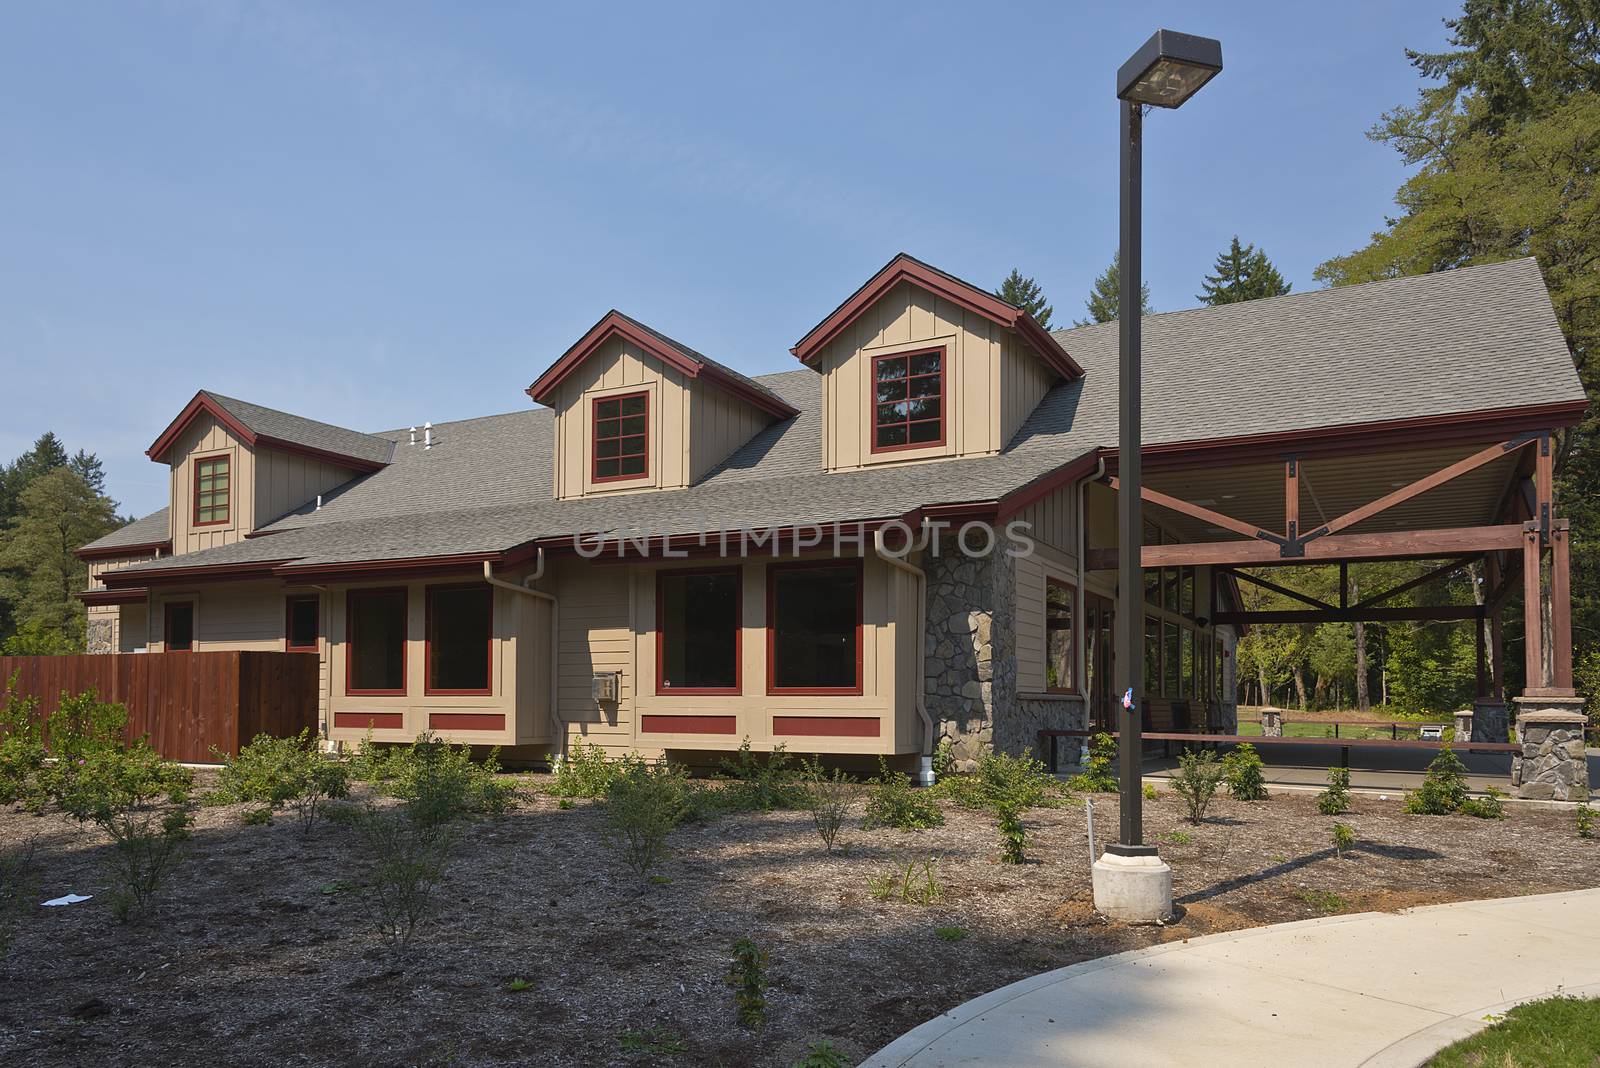 Community center building in Camas Washington state.